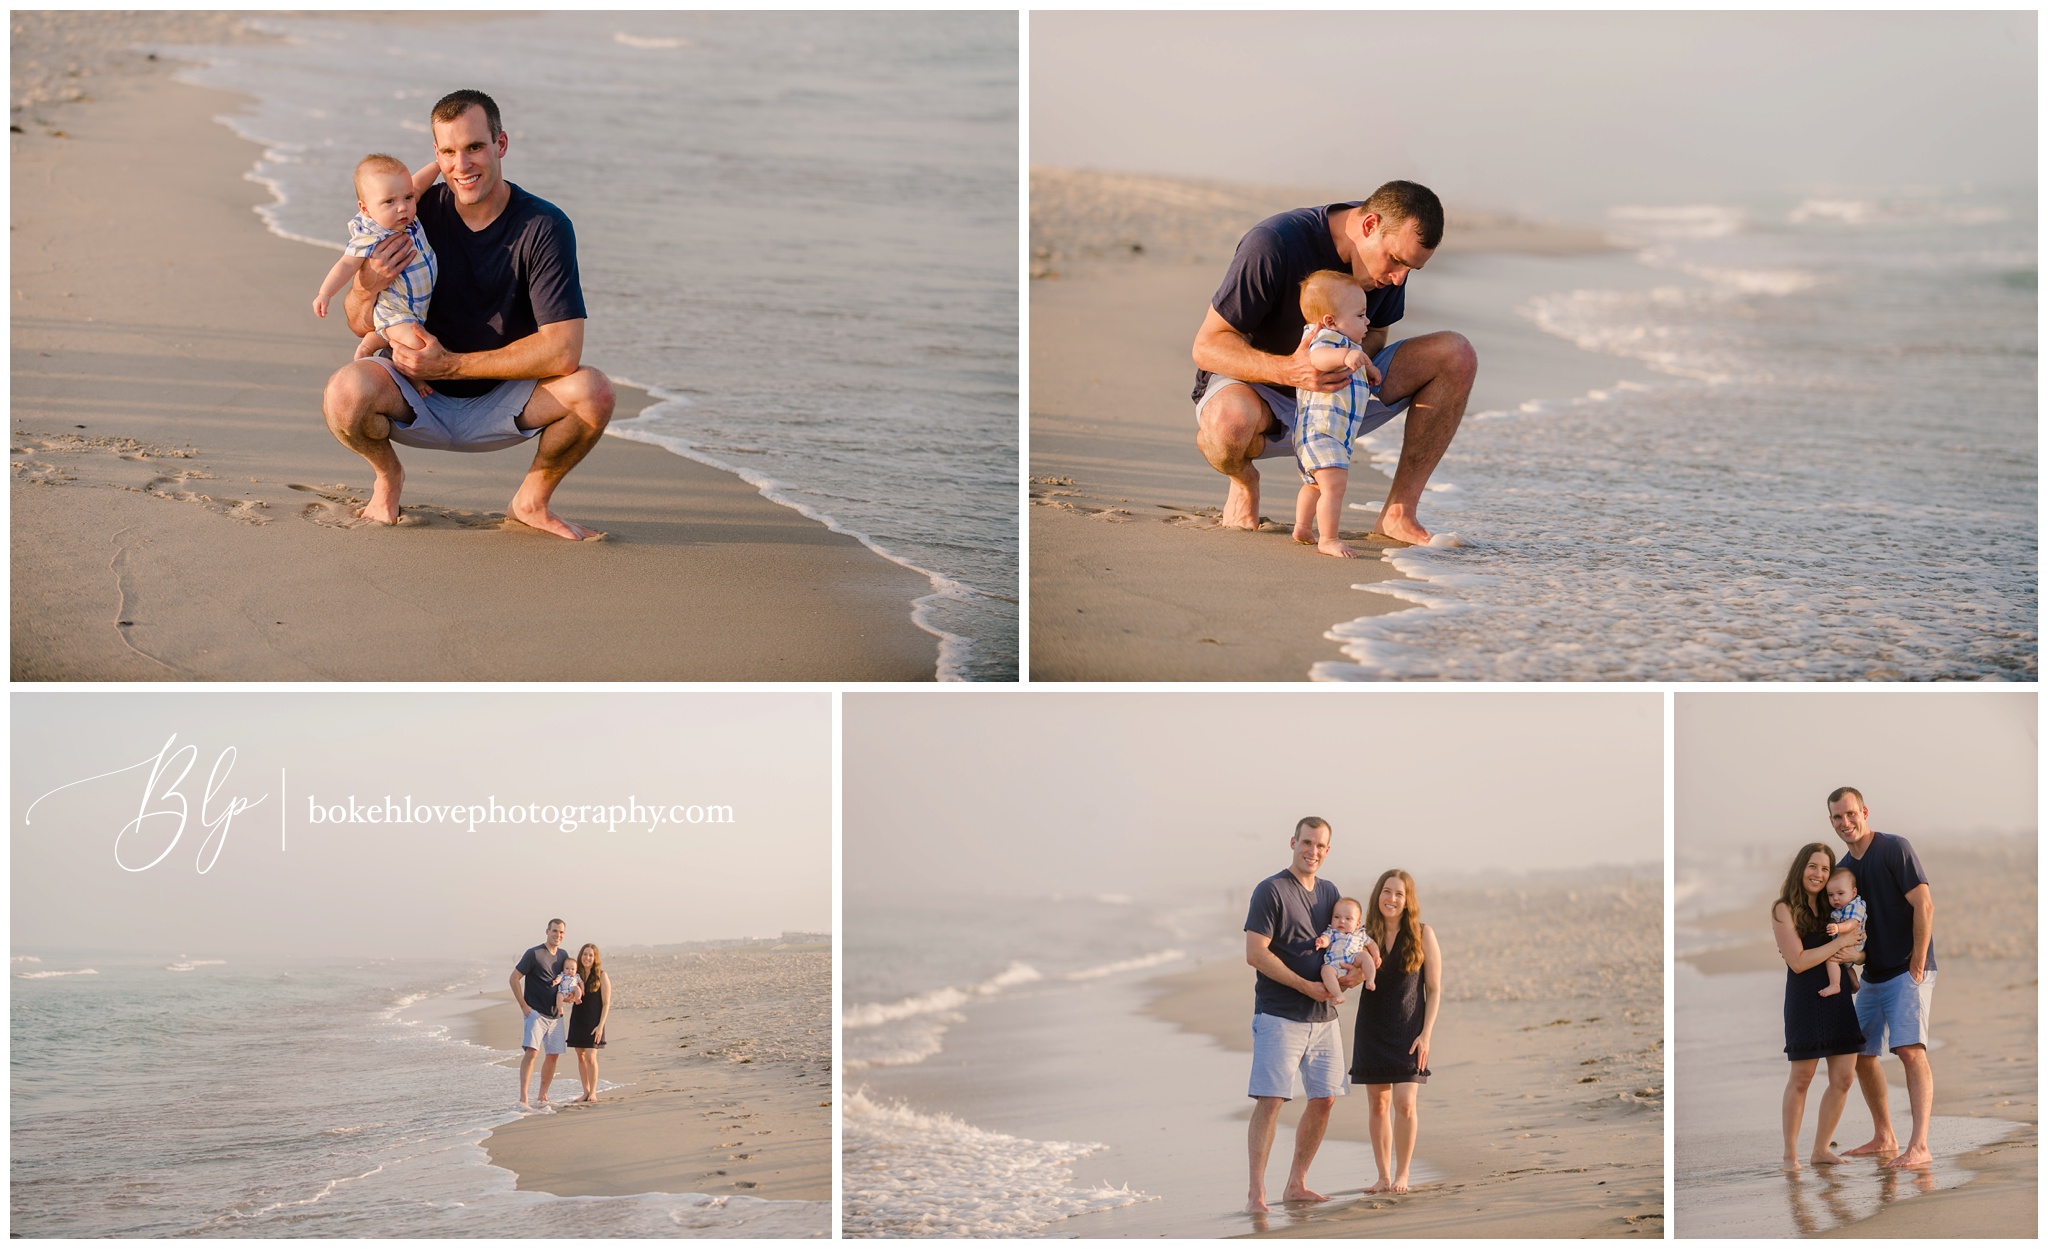 Bokeh Love Photography, NJ Beach Photographer, South Jersey Beach Photographer, Jersey Shore Beach Photographer, Jersey Shore Beach Portraits